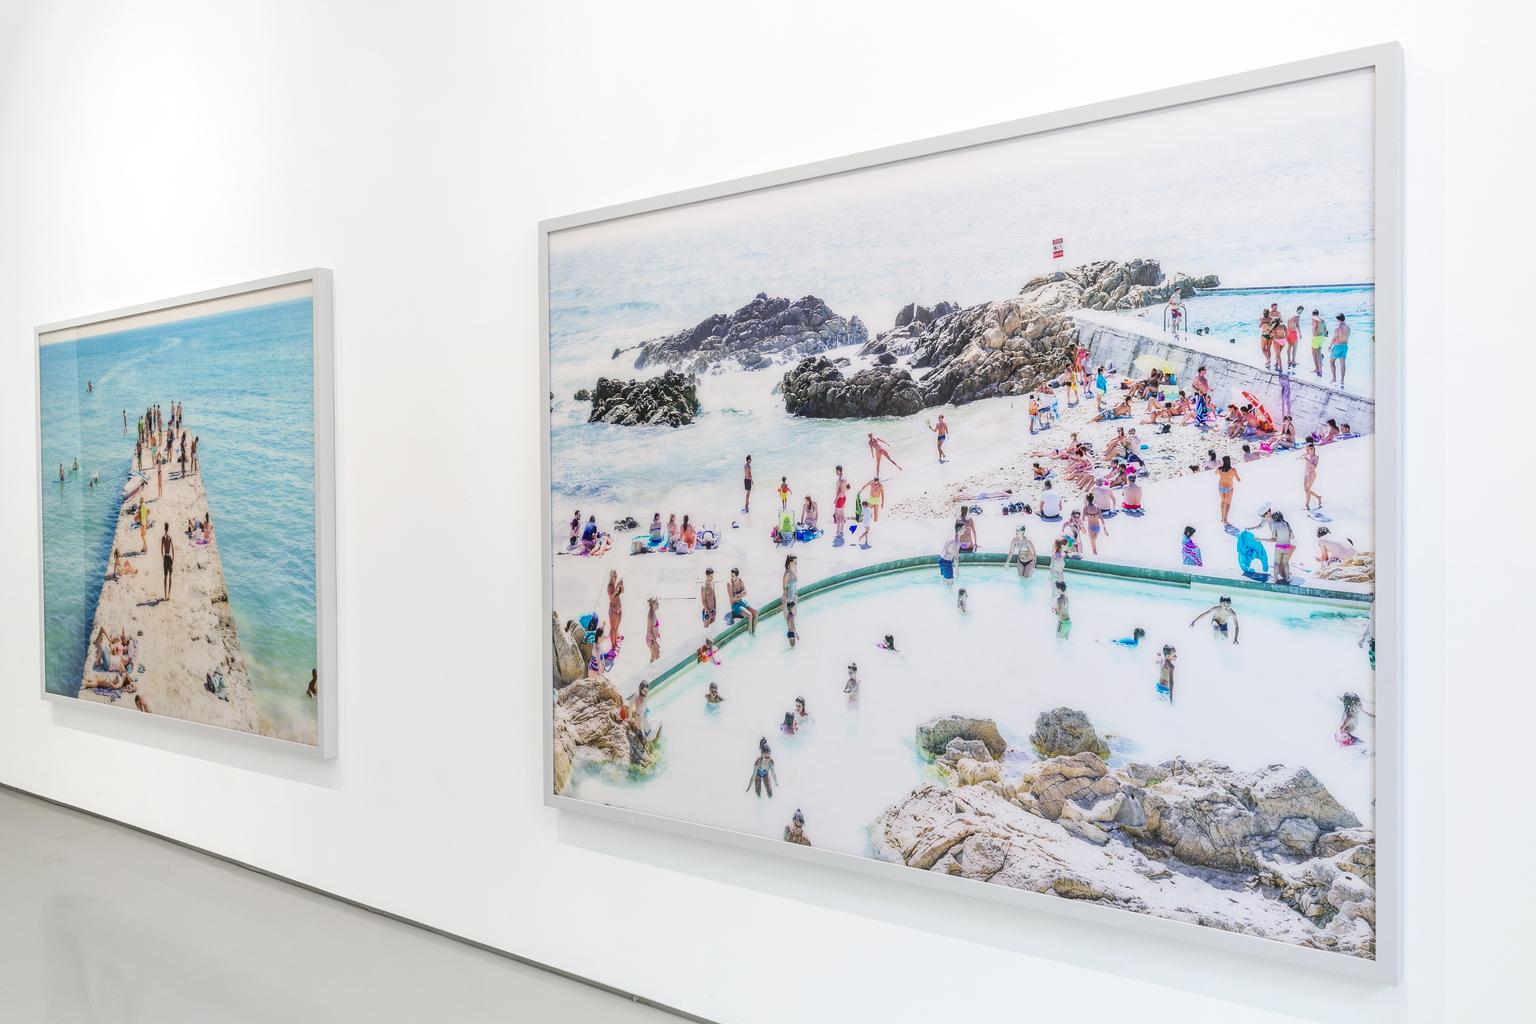 Pan di Zucchero - large scale photo of Mediterranean beach scene (framed)  - Gray Color Photograph by Massimo Vitali